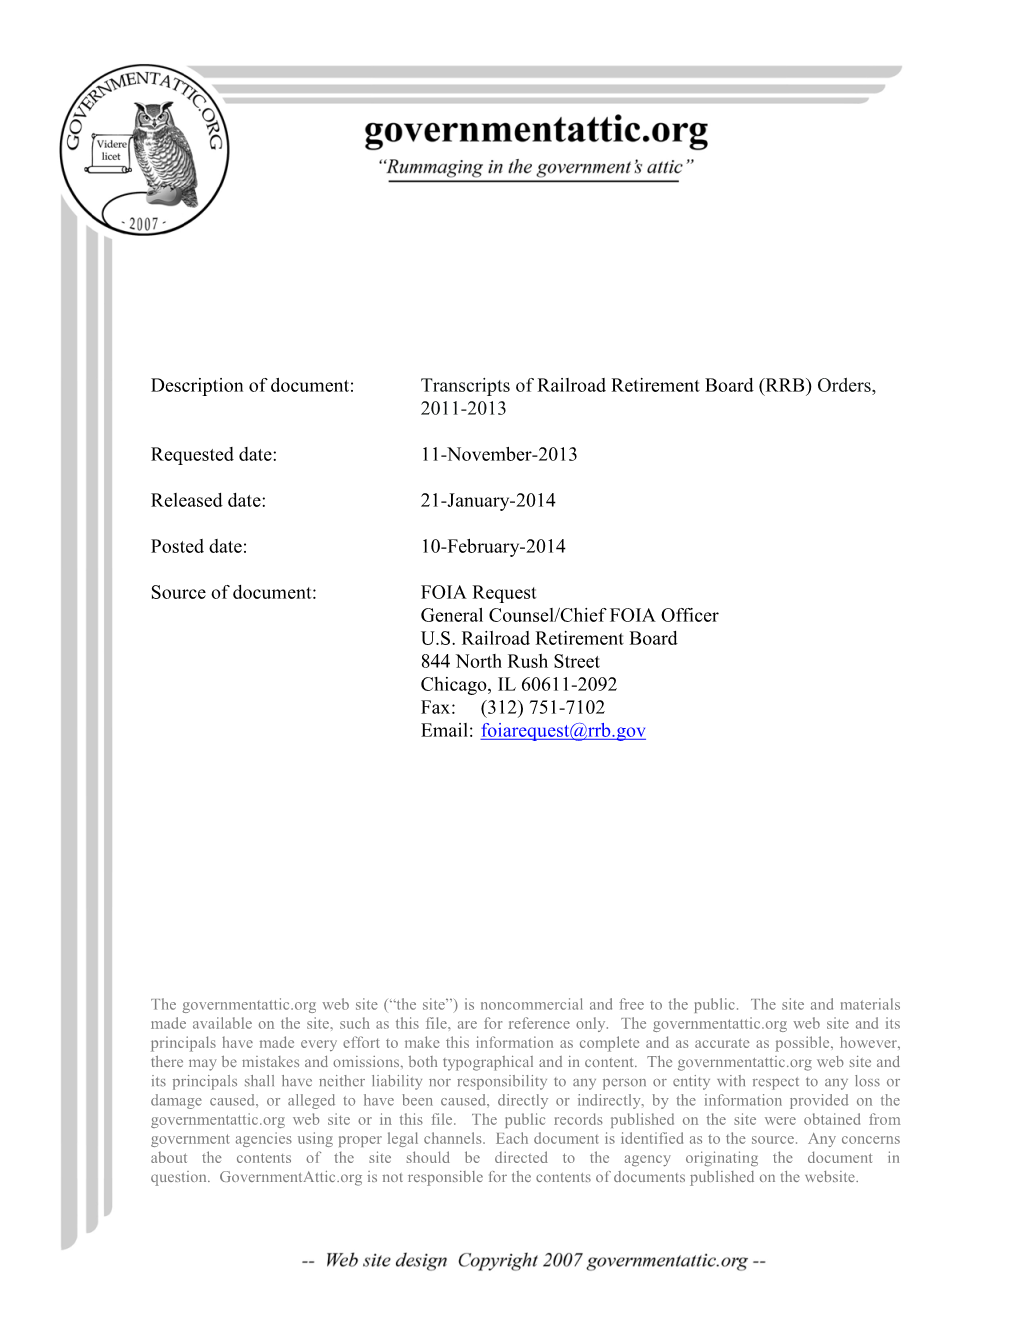 Transcripts of Railroad Retirement Board (RRB) Orders, 2011-2013